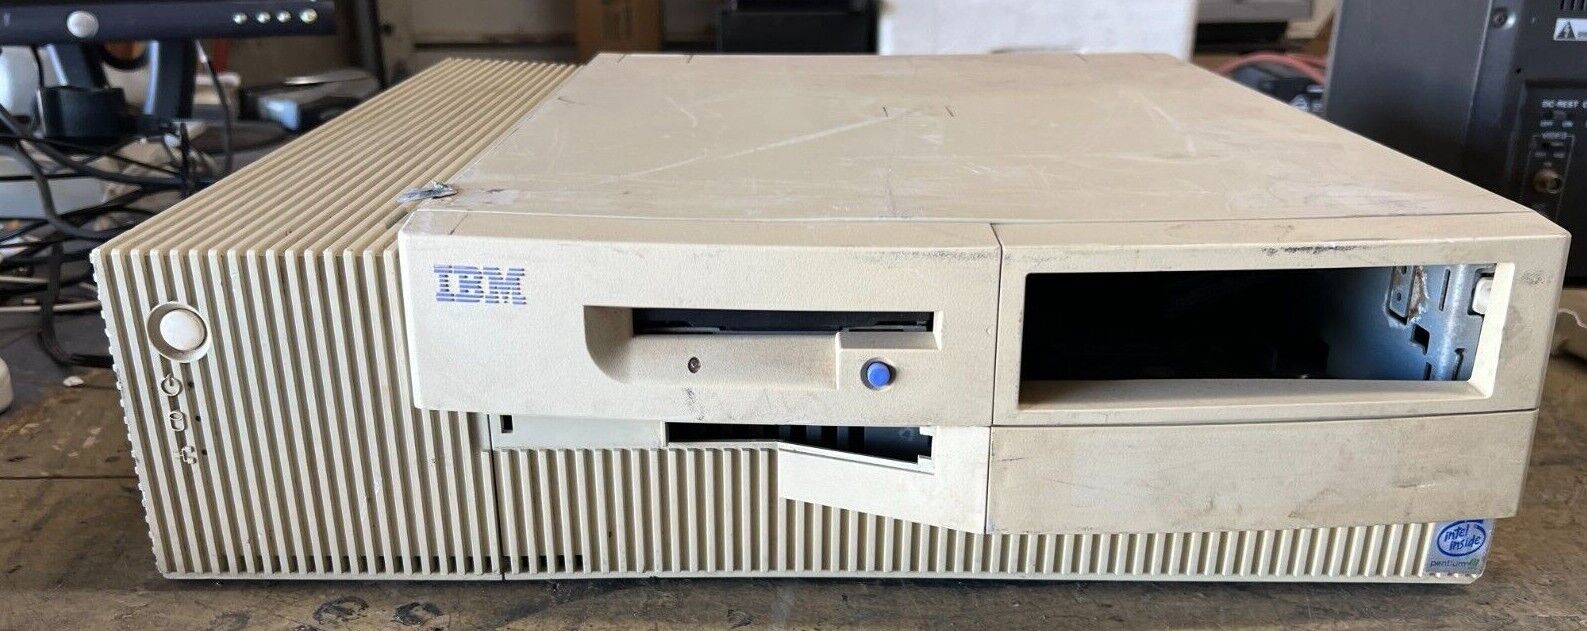 *VINTAGE* IBM Personal Computer 300PL.  Model 6862